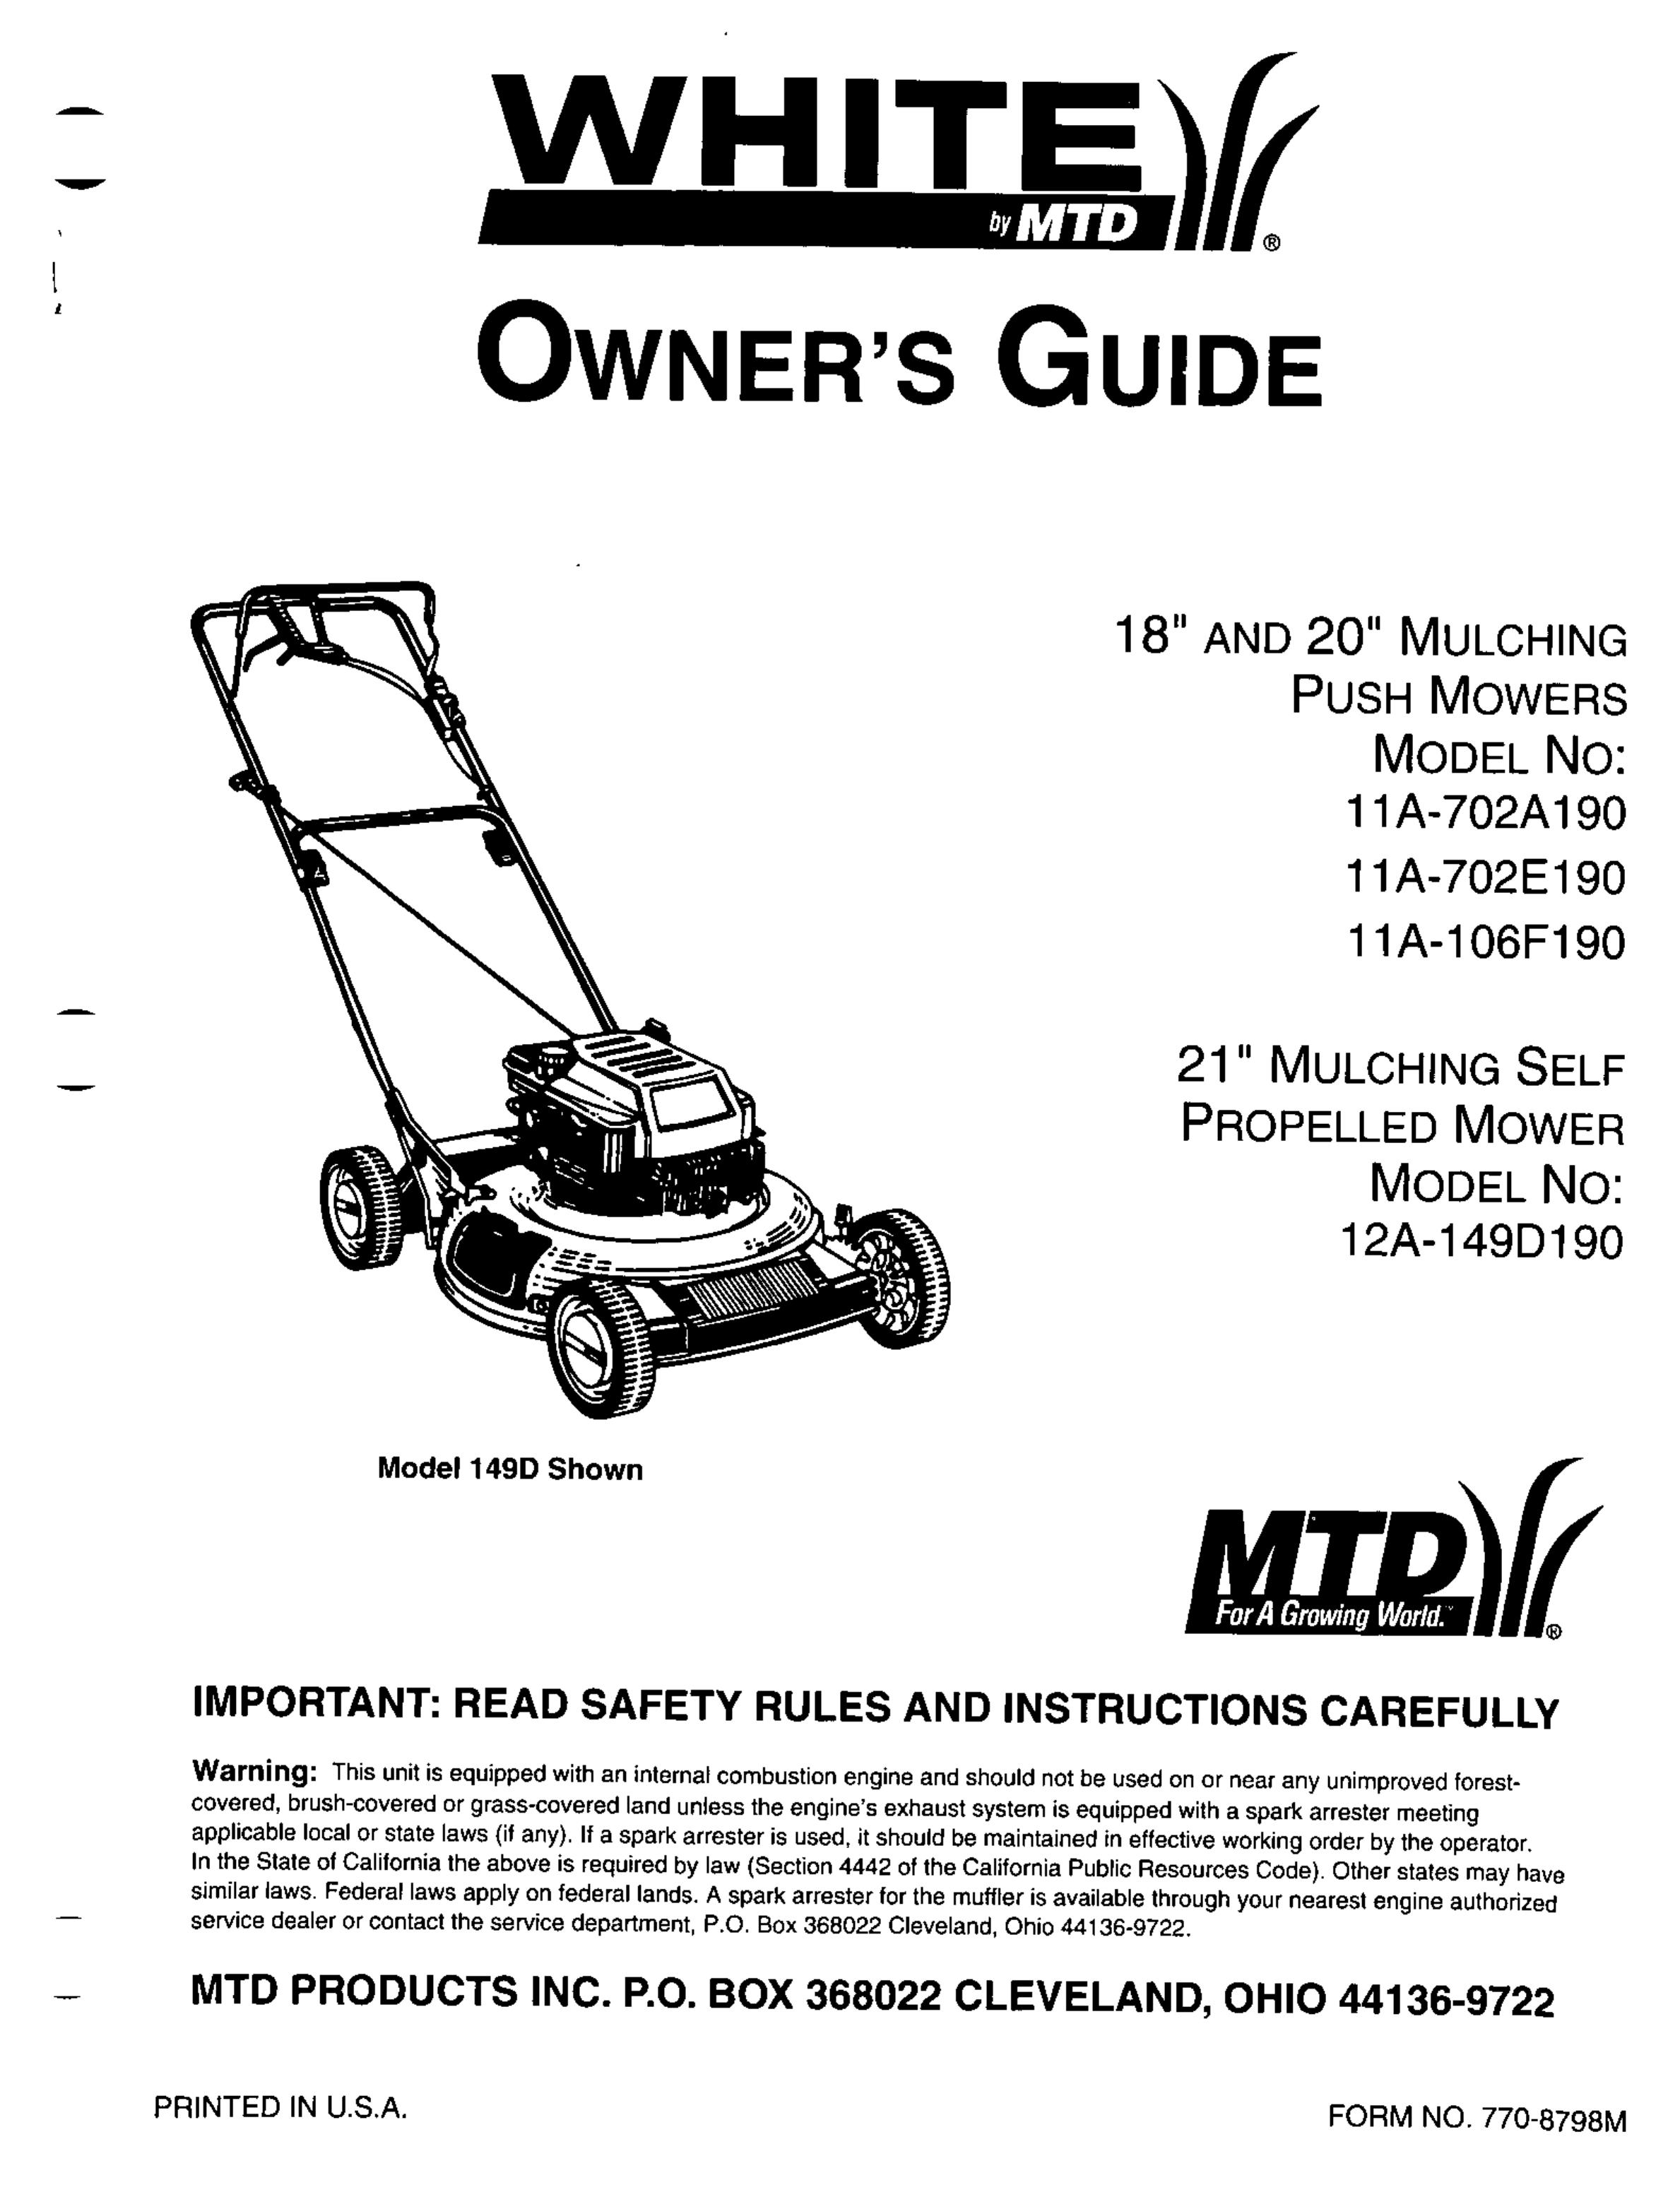 White 12A-149D190 Lawn Mower User Manual